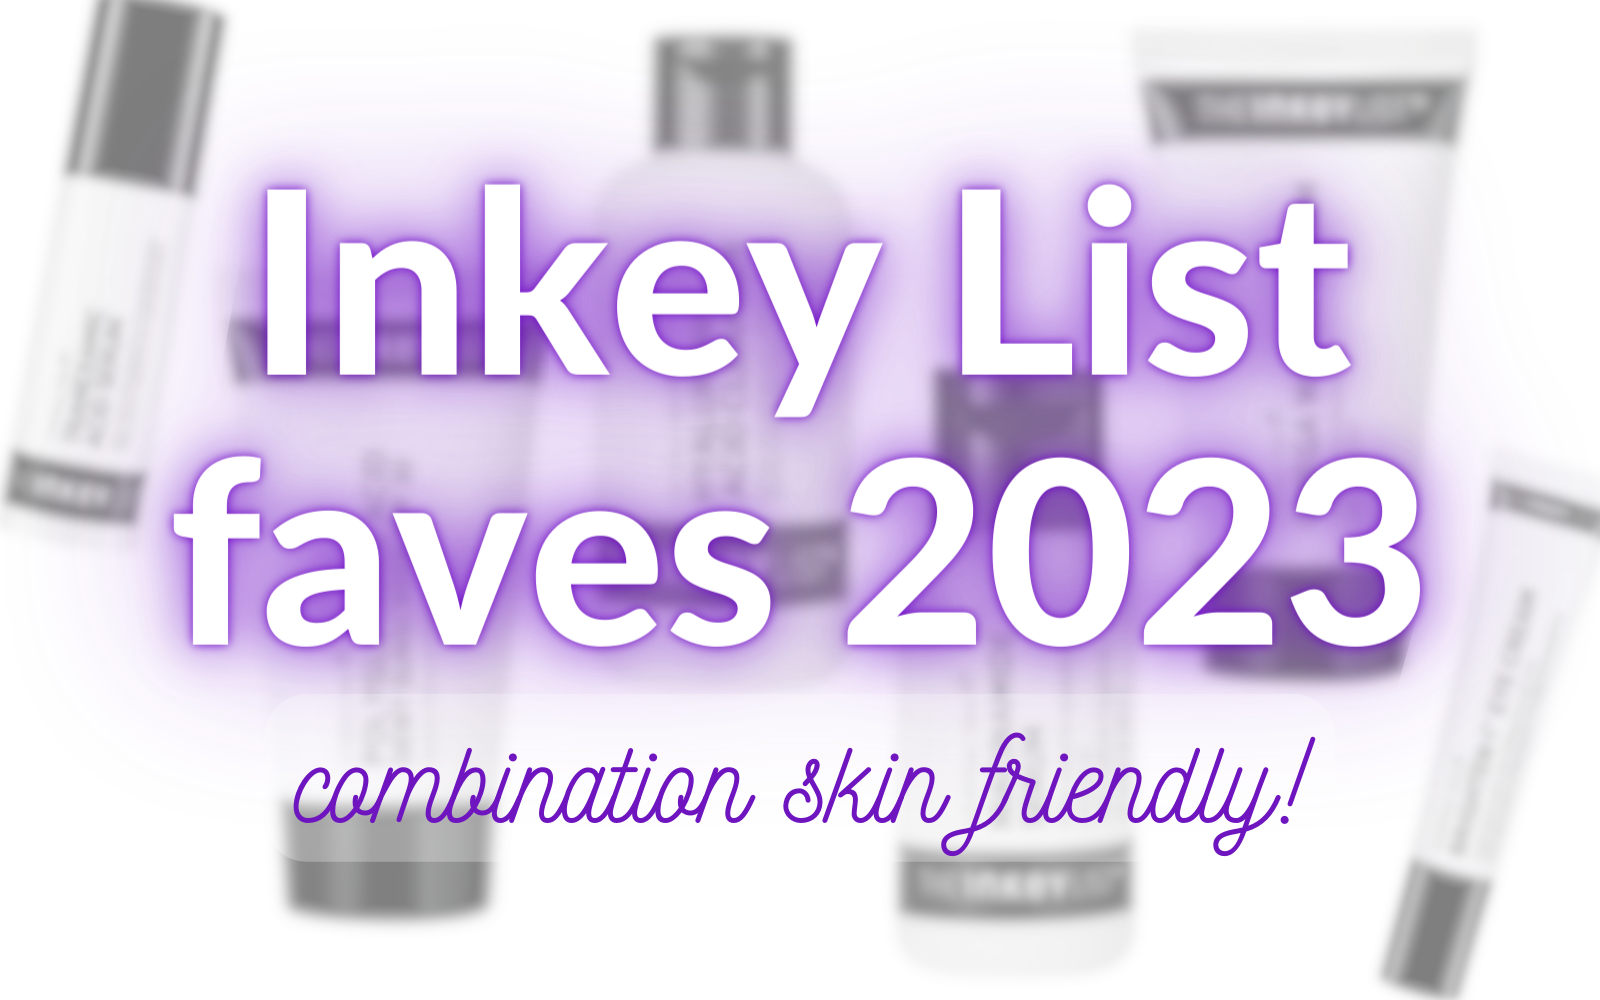 inkey list favorites for combination skin